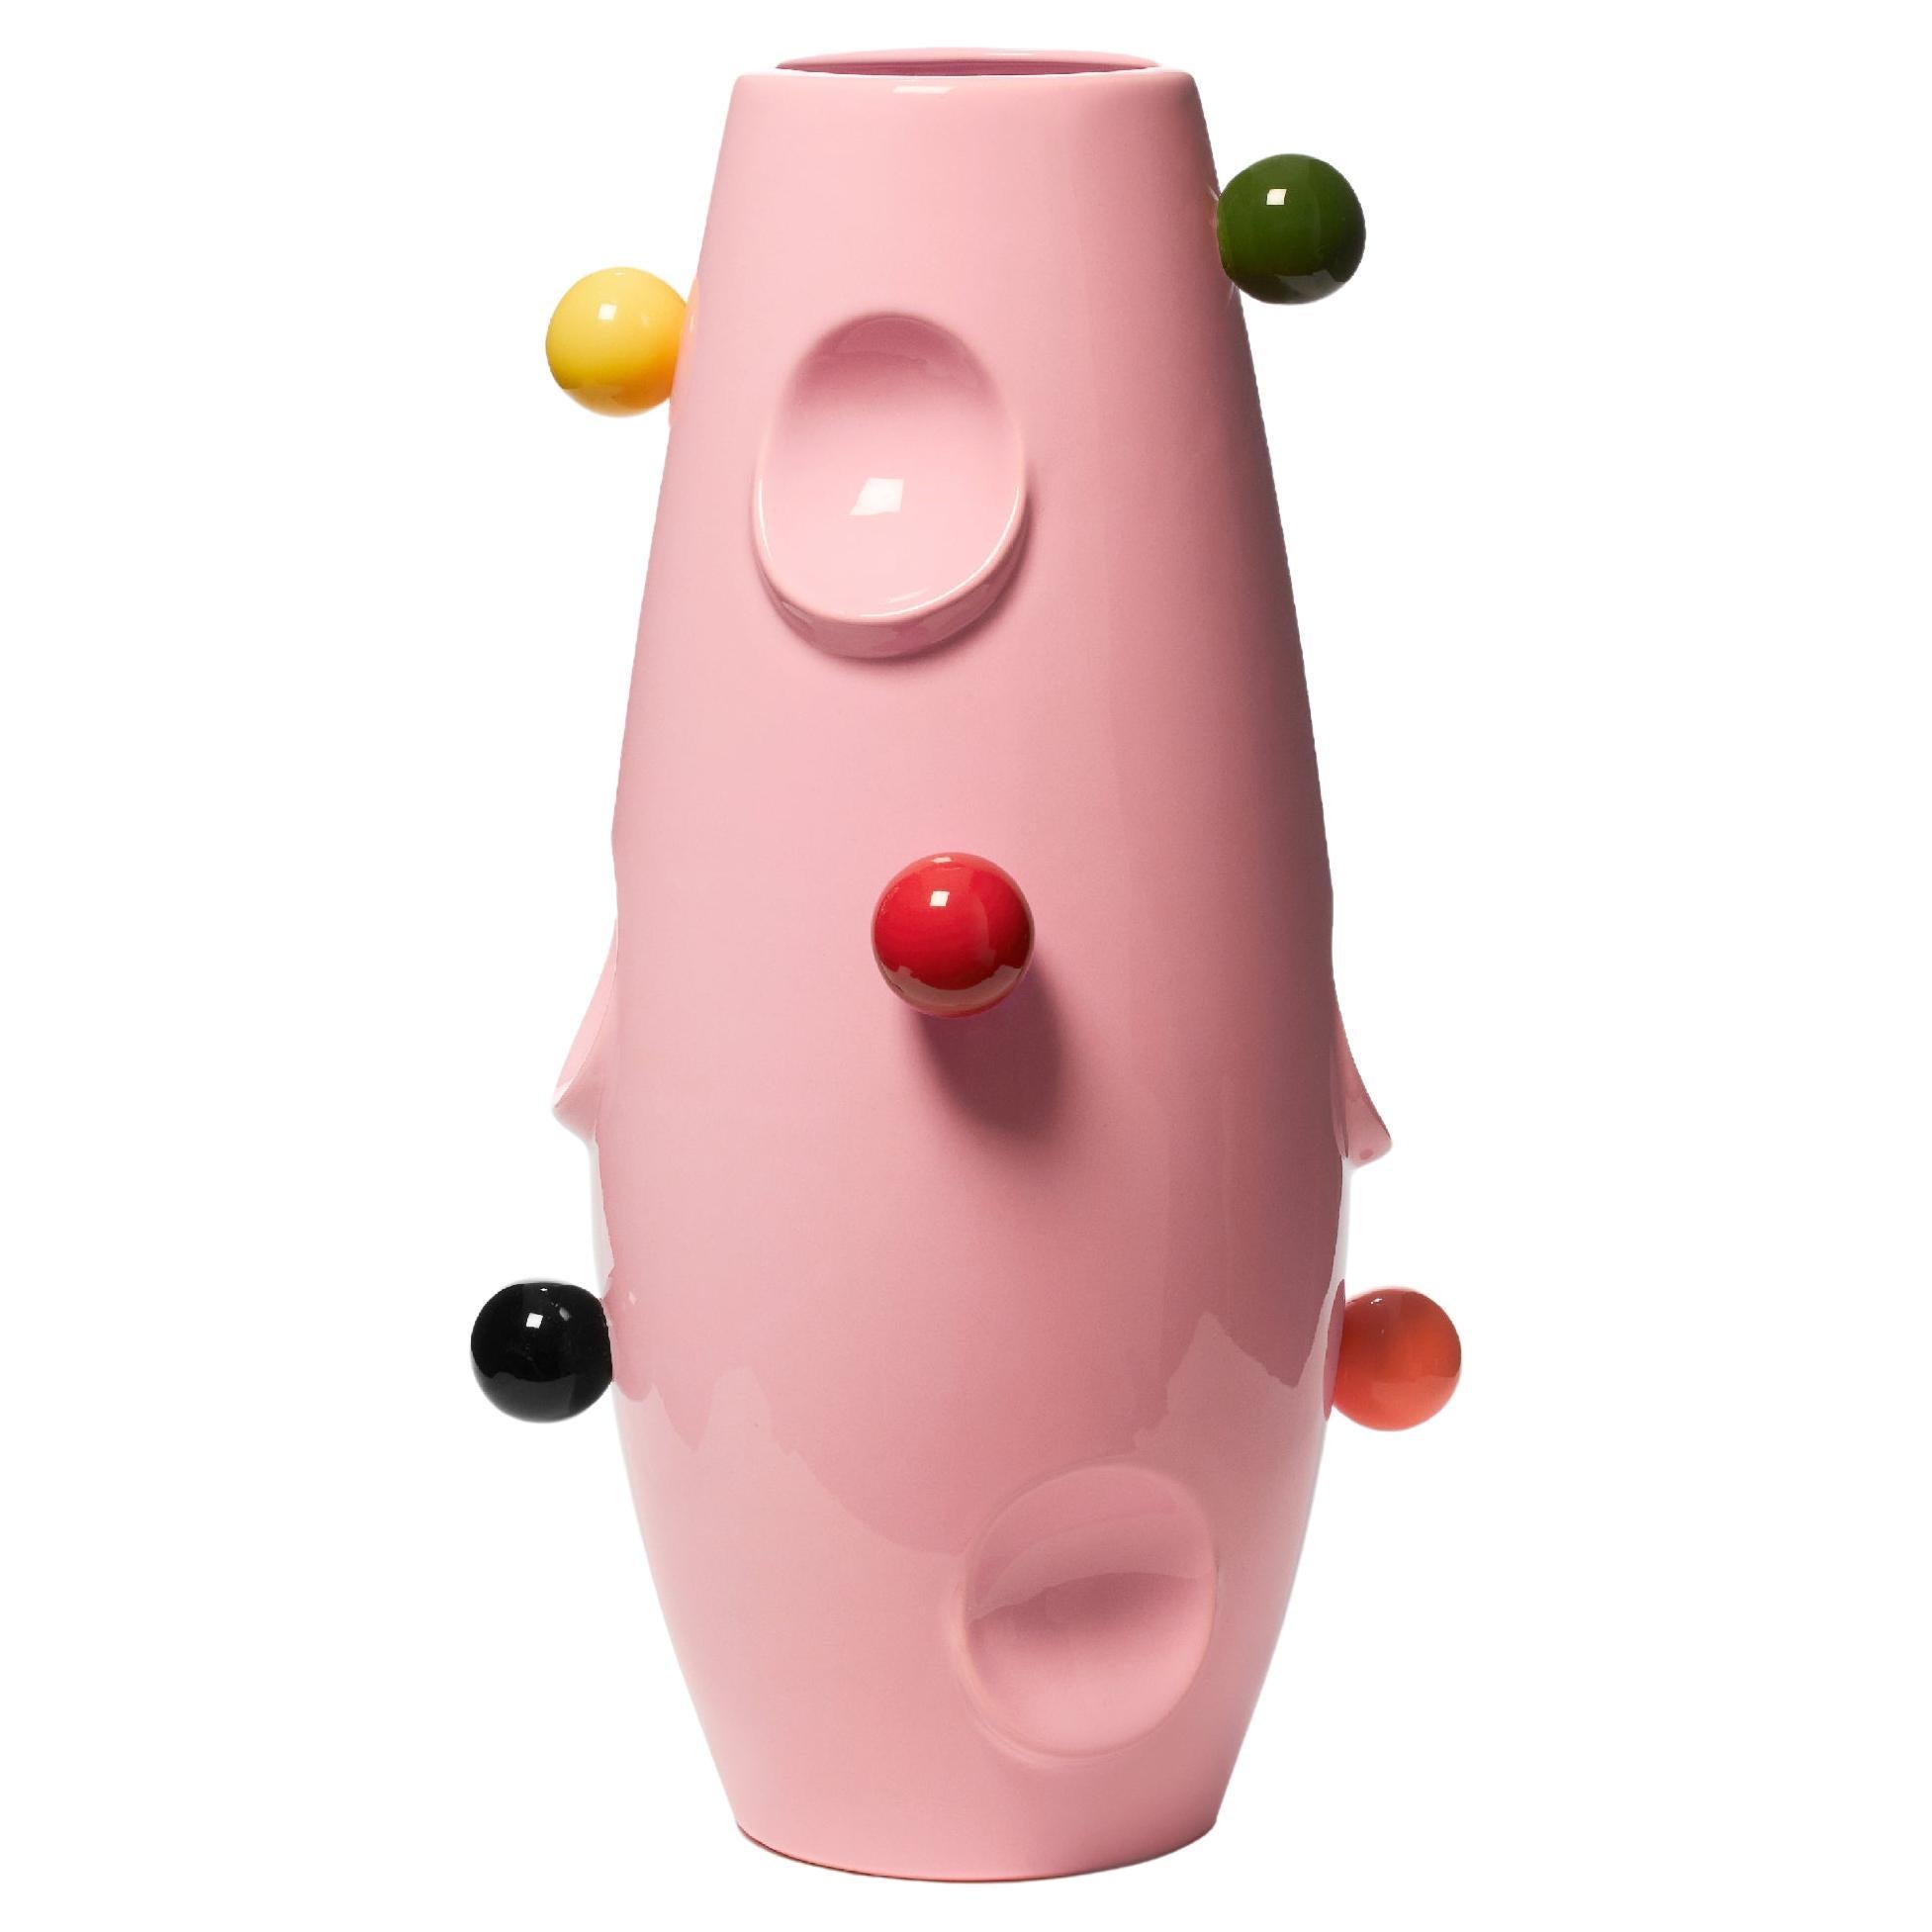 OKO / Circus / Candy Glazed Vase by Malwina Konopacka For Sale